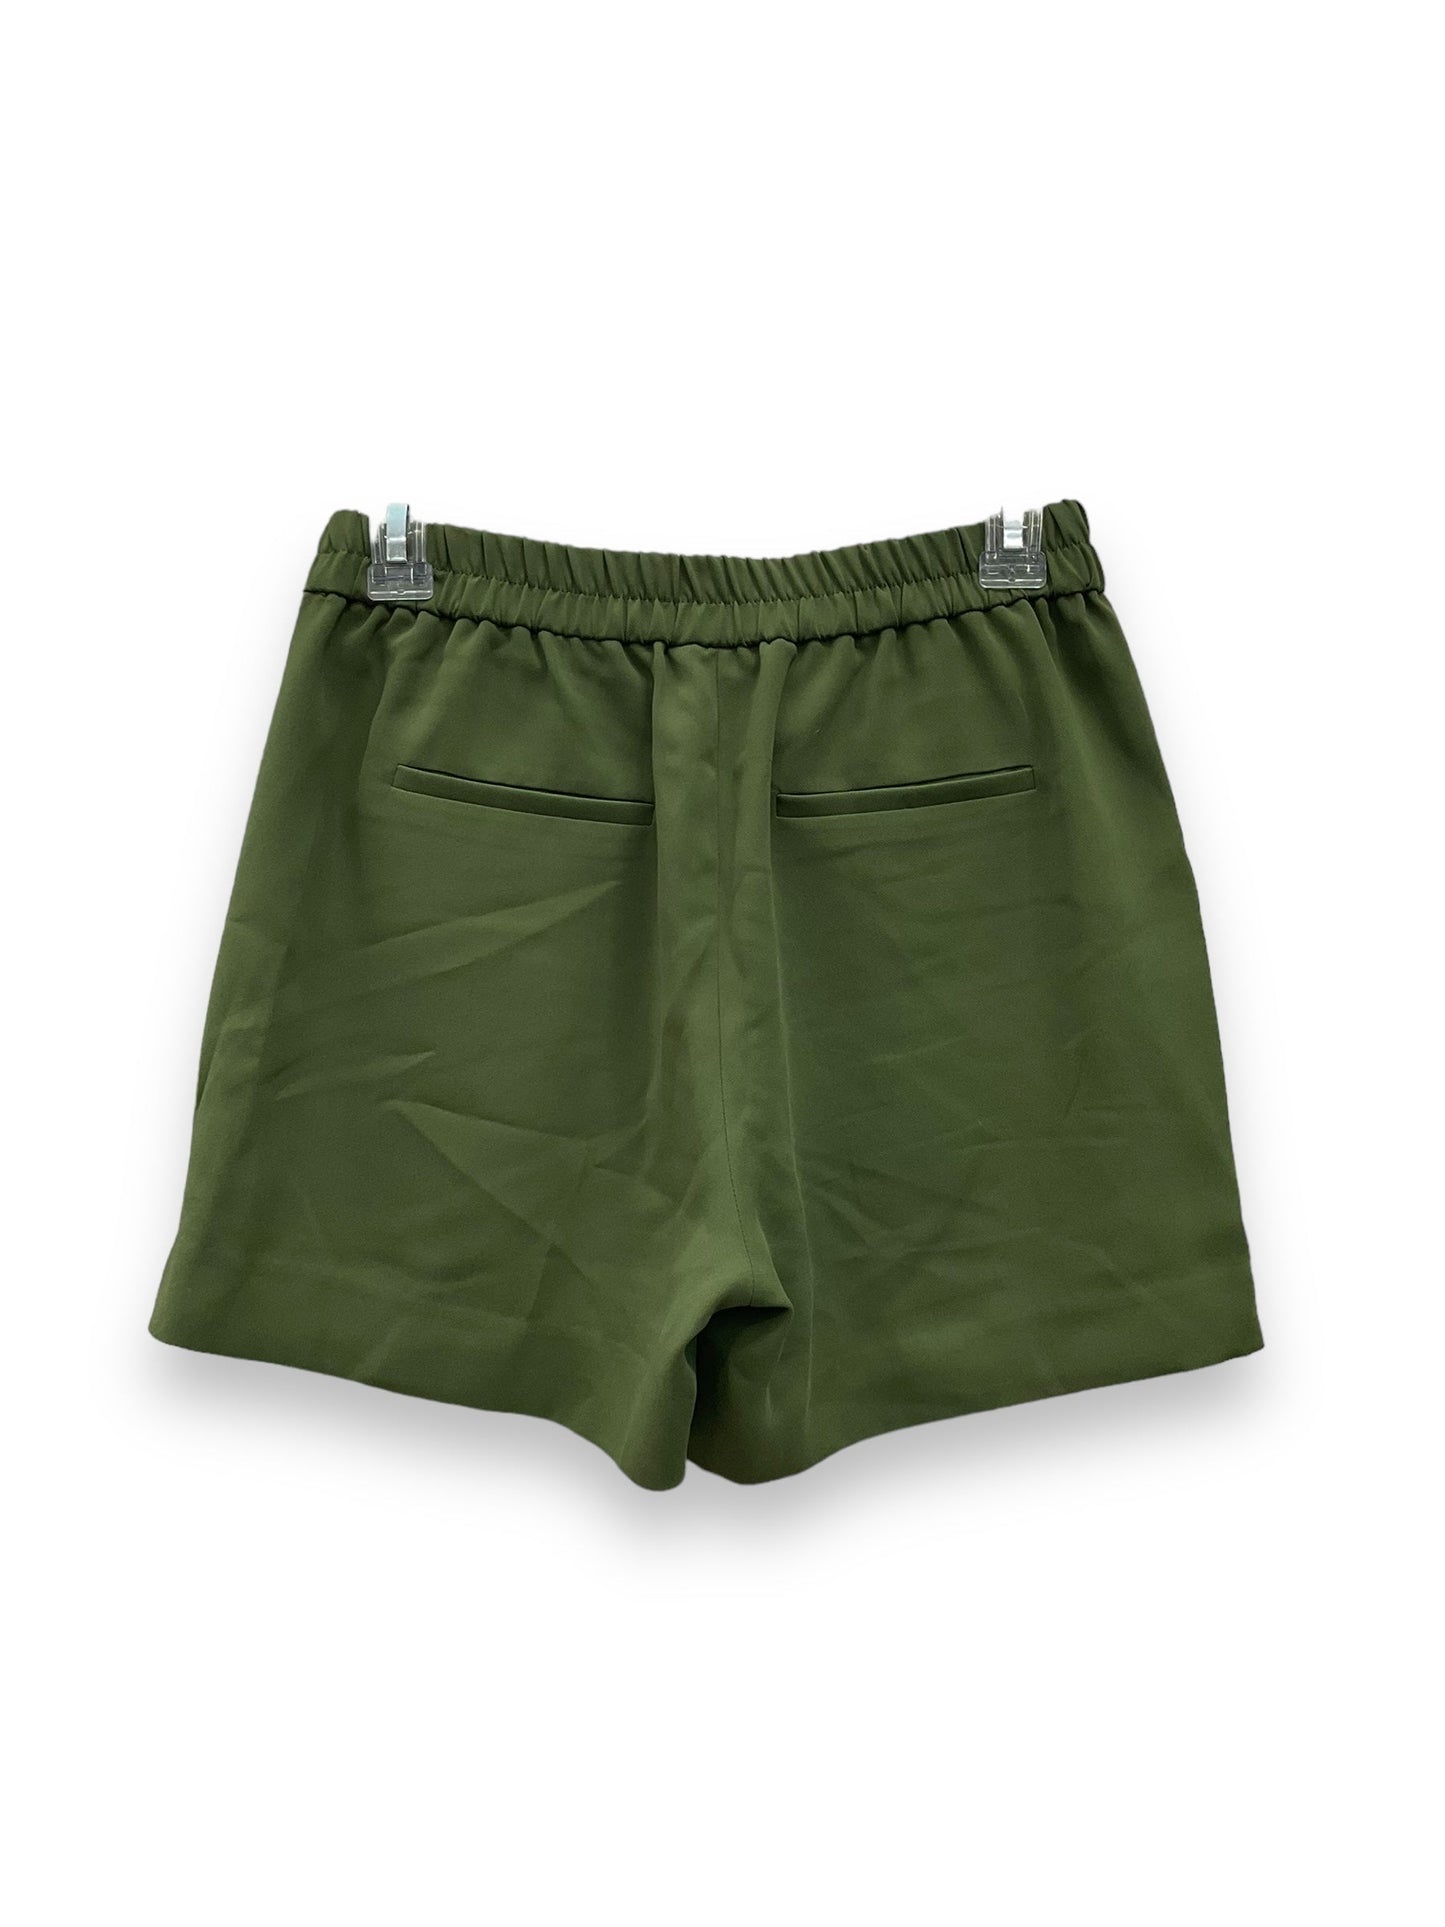 Green Shorts J. Crew, Size 0